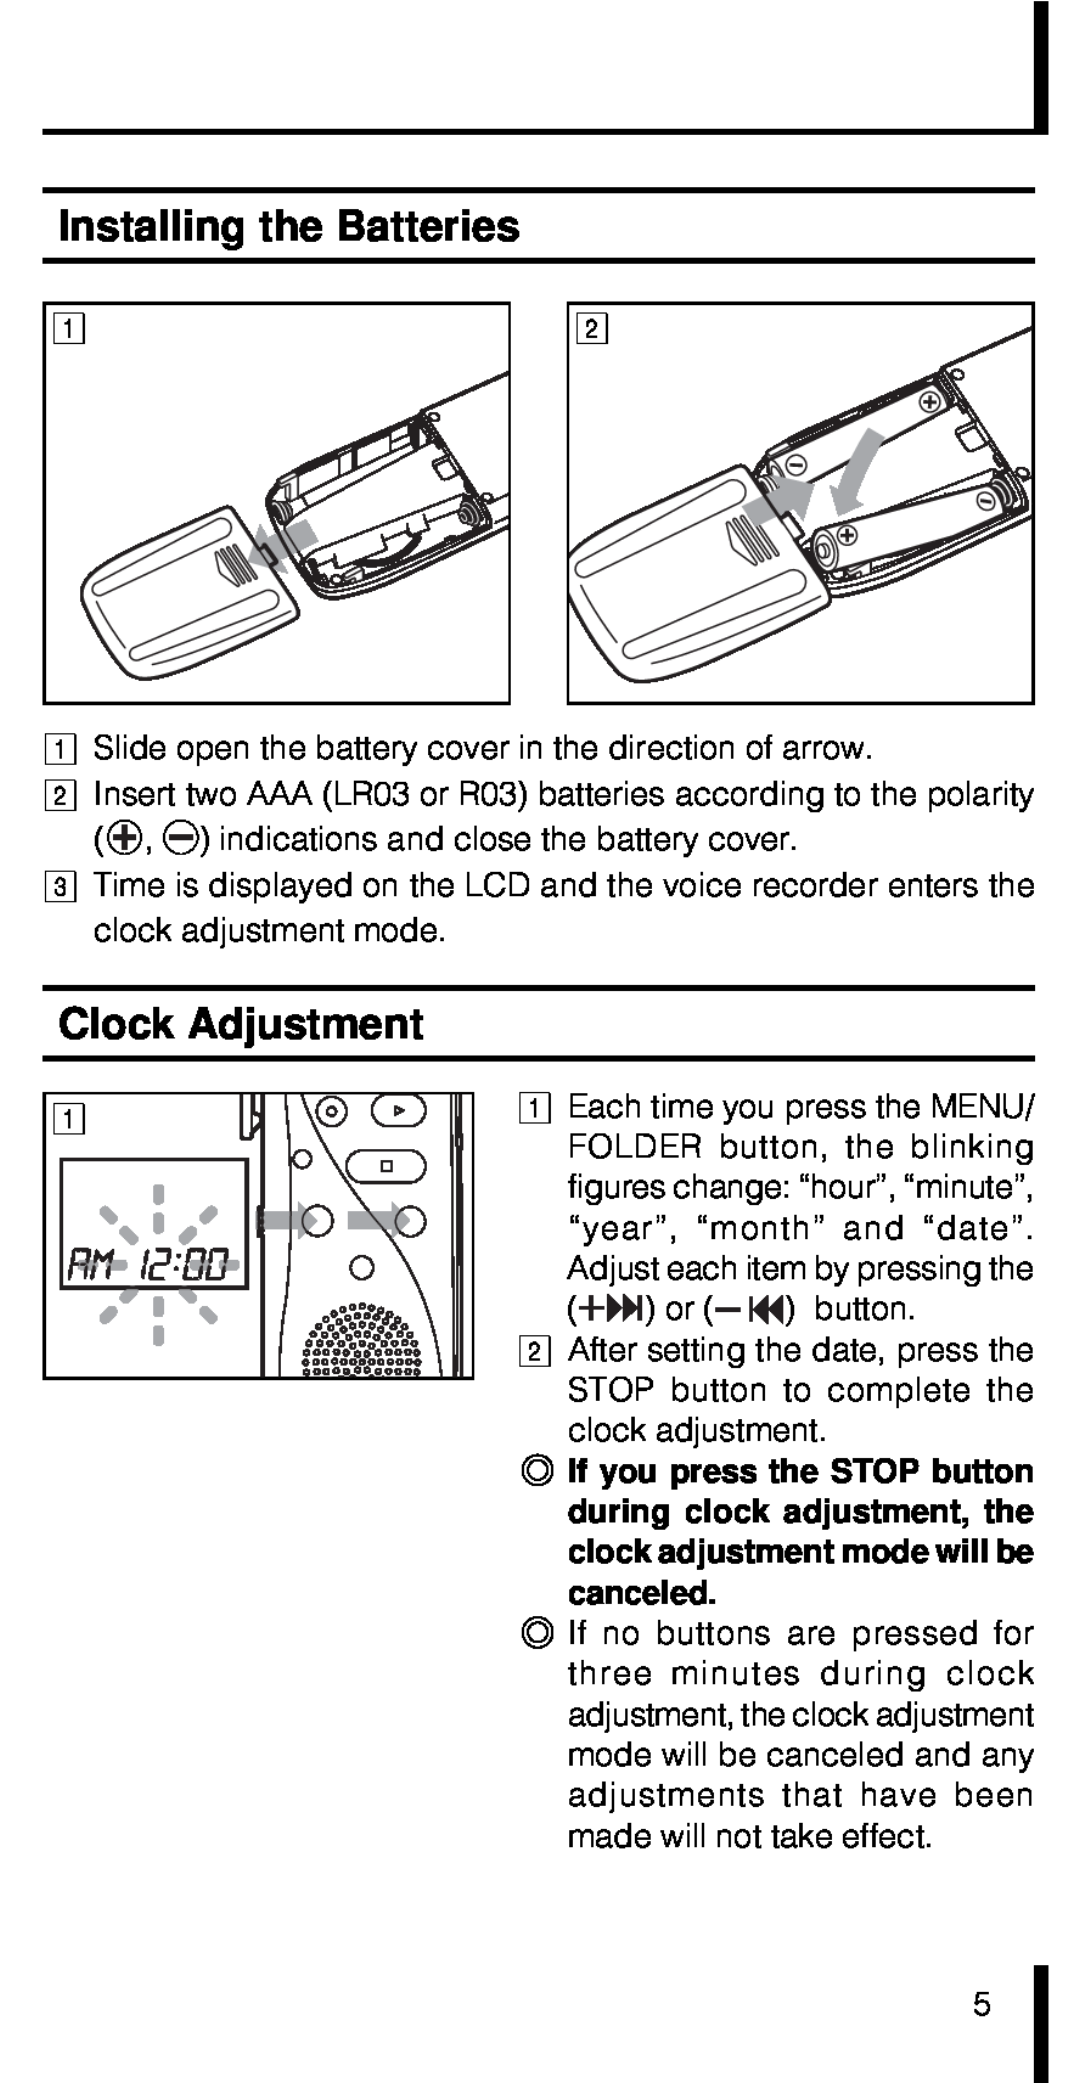 Olympus VN-180 manual Installing the Batteries, Clock Adjustment 